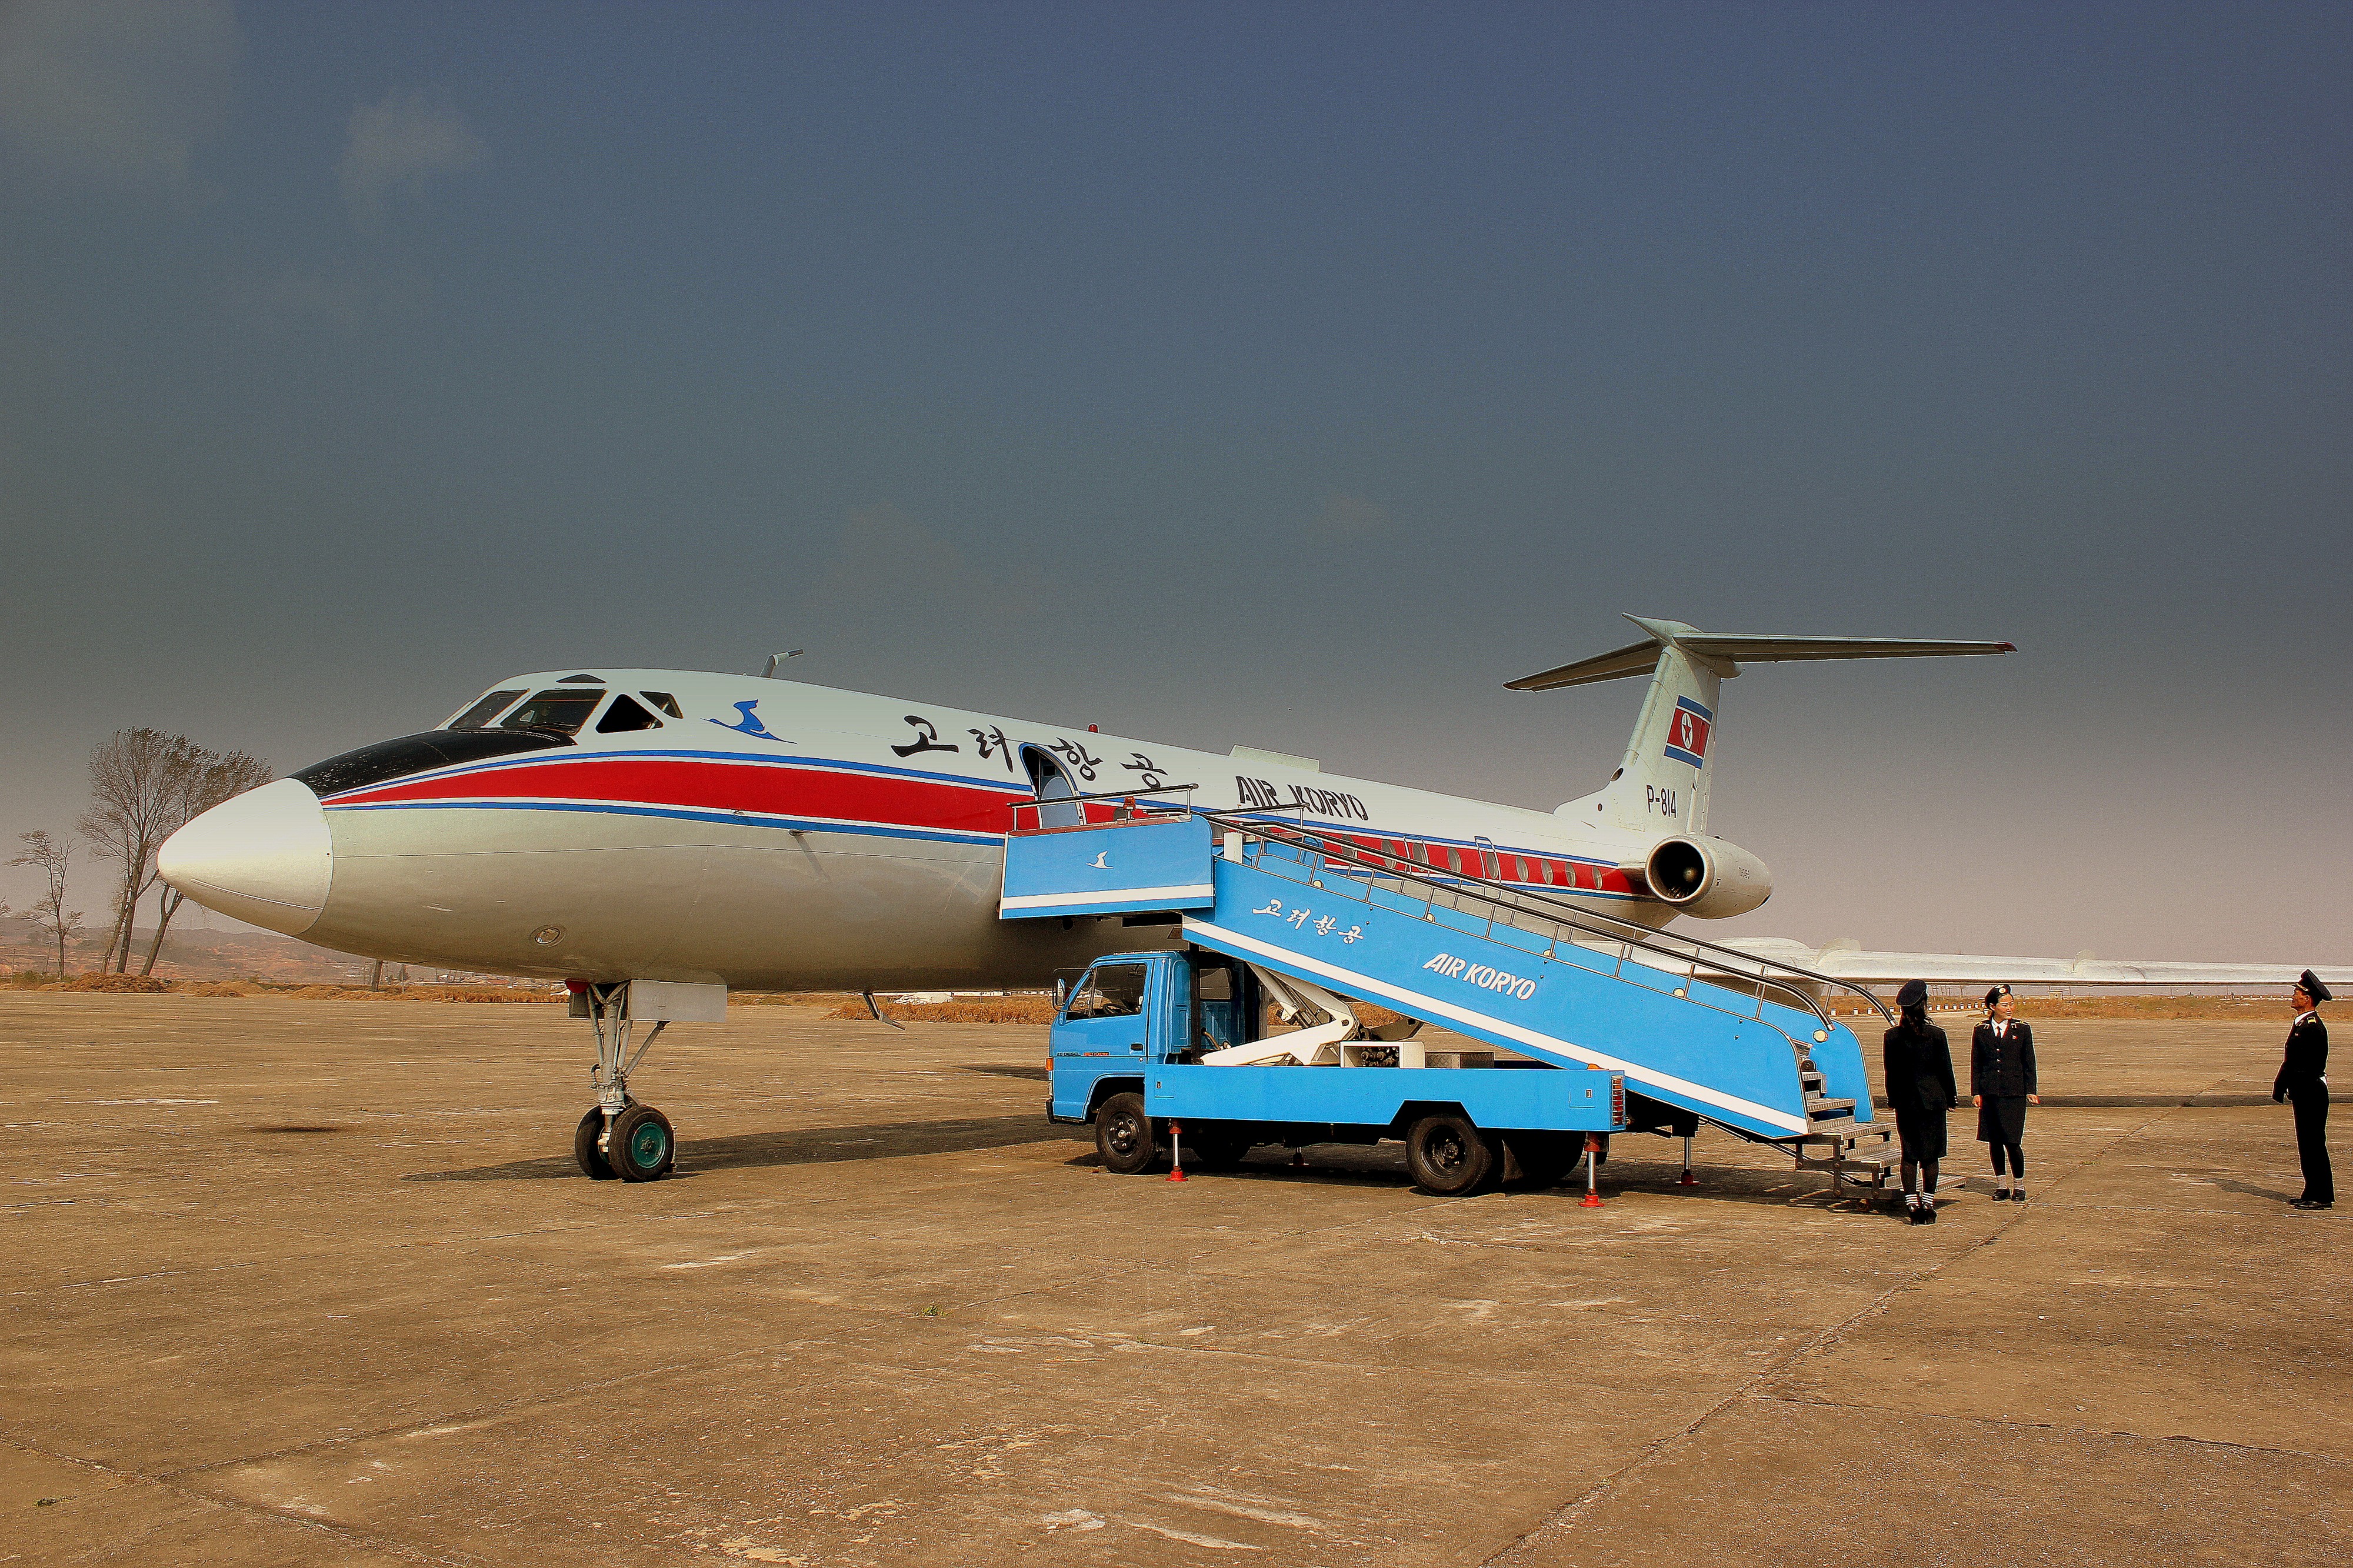 AIR KORYO TUPOLEV TU134 FLIGHT P814 JS5205 ON ARRIVAL AT SONDOK HAMHUNG AIRPORT DPR KOREA OCT 2012 (8197654162)